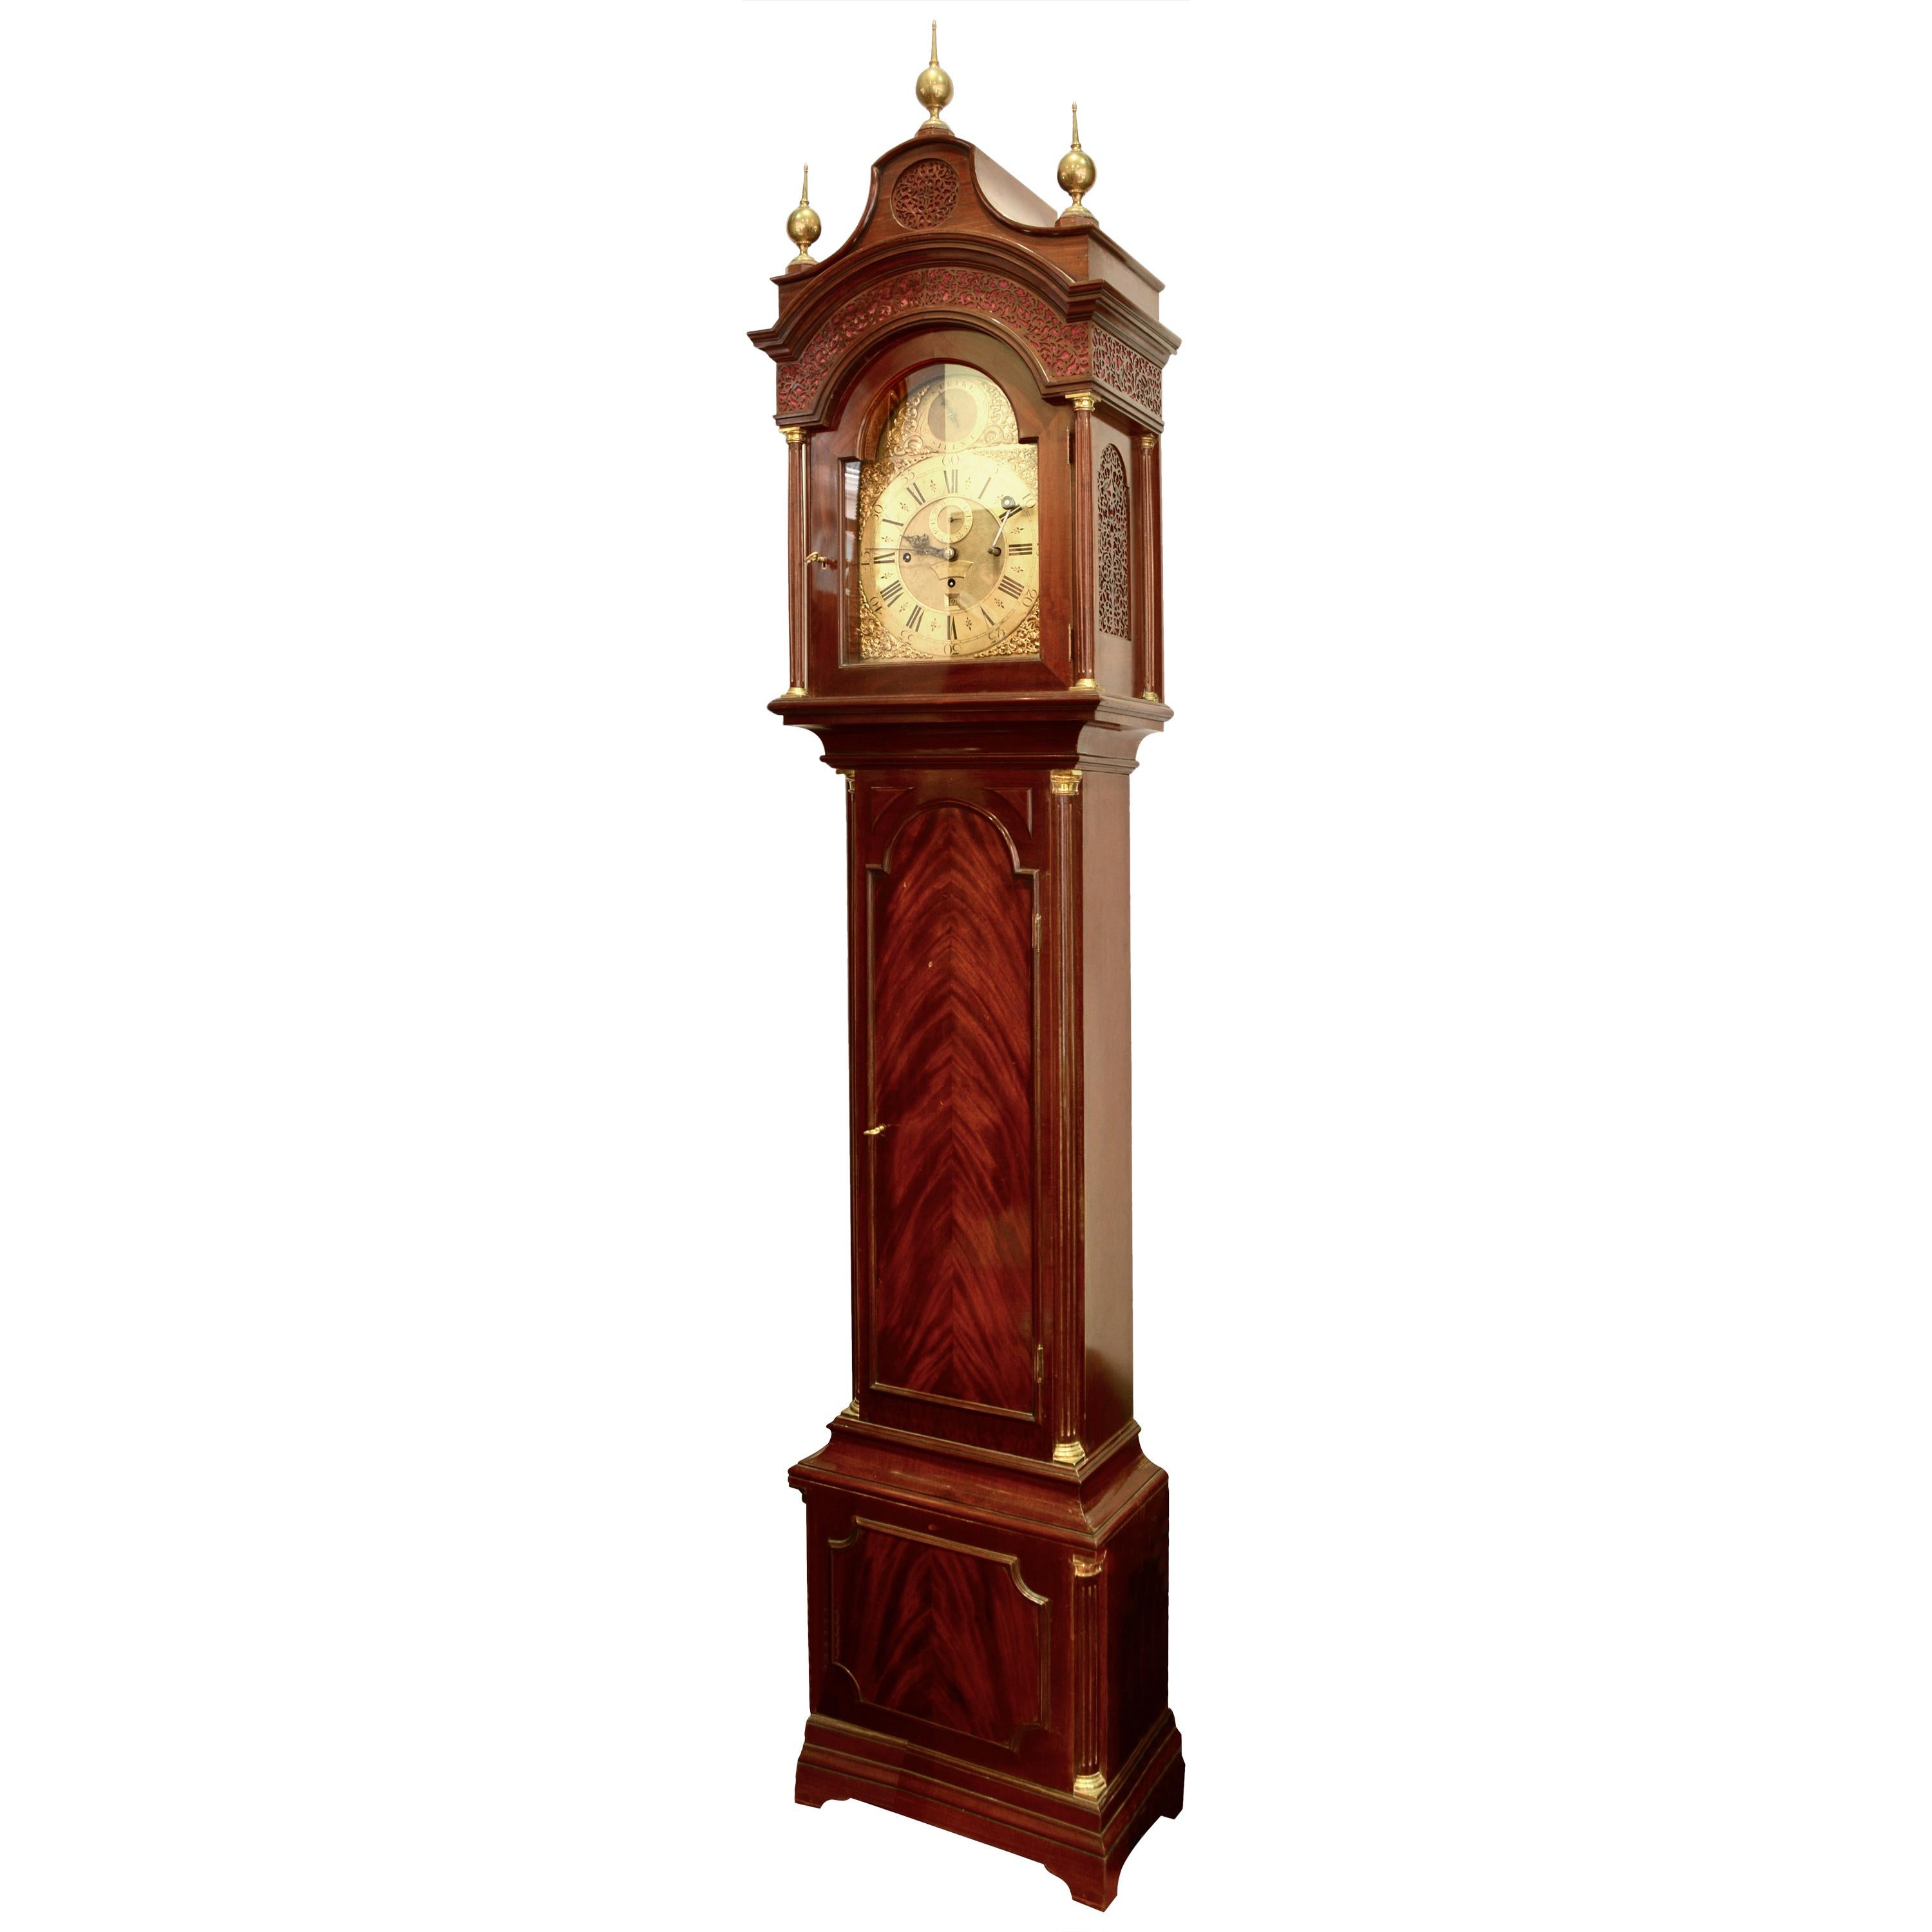 Mahogany Grandfather clock, William Webster, London, England, 1711-1770.